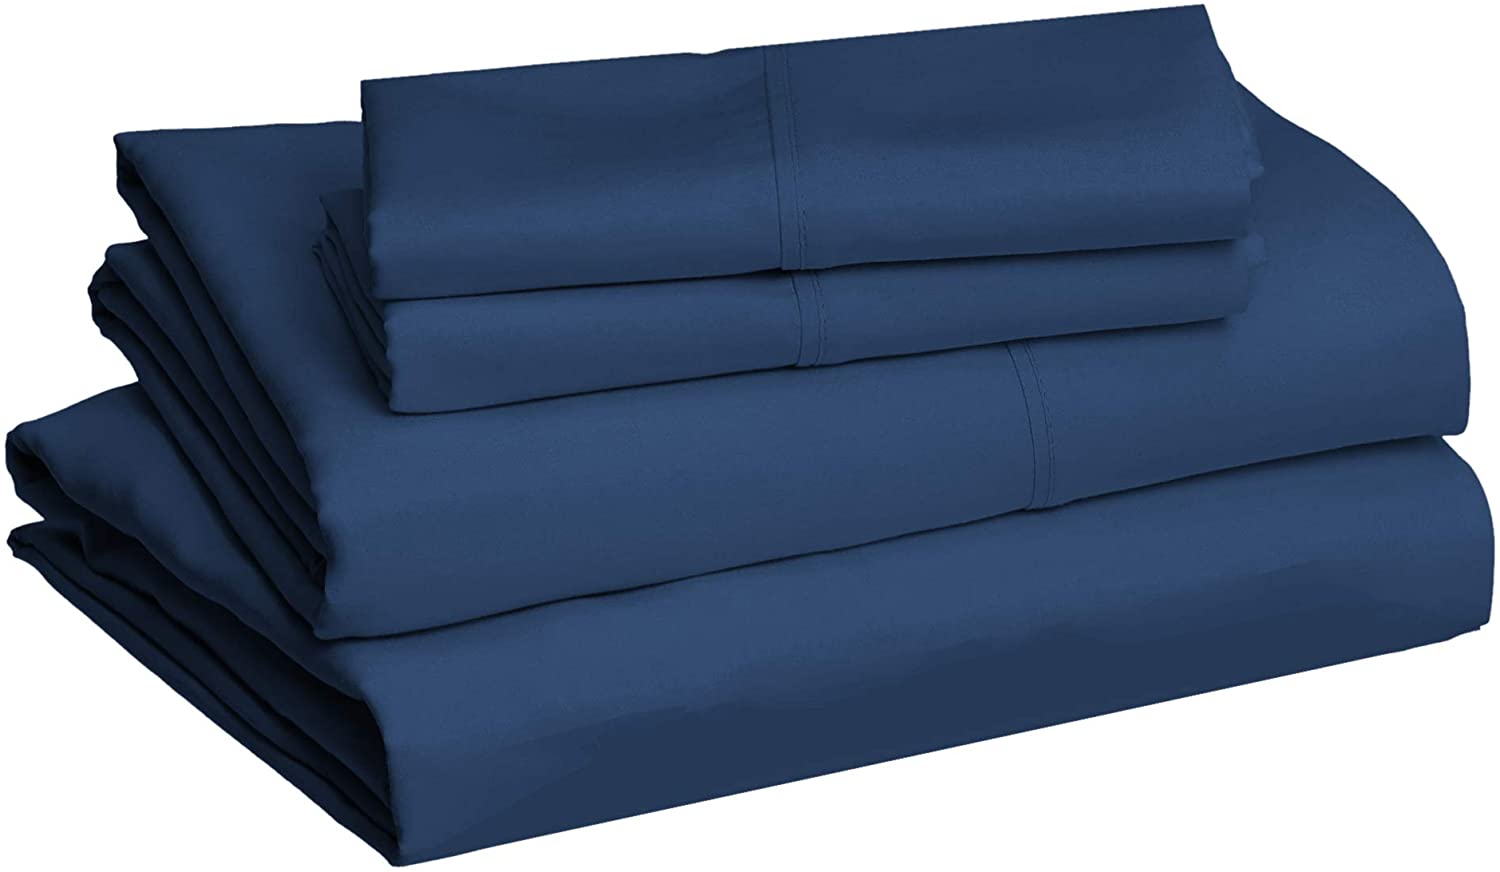 AmazonBasics Lightweight Easy Care Microfiber Bed Sheets